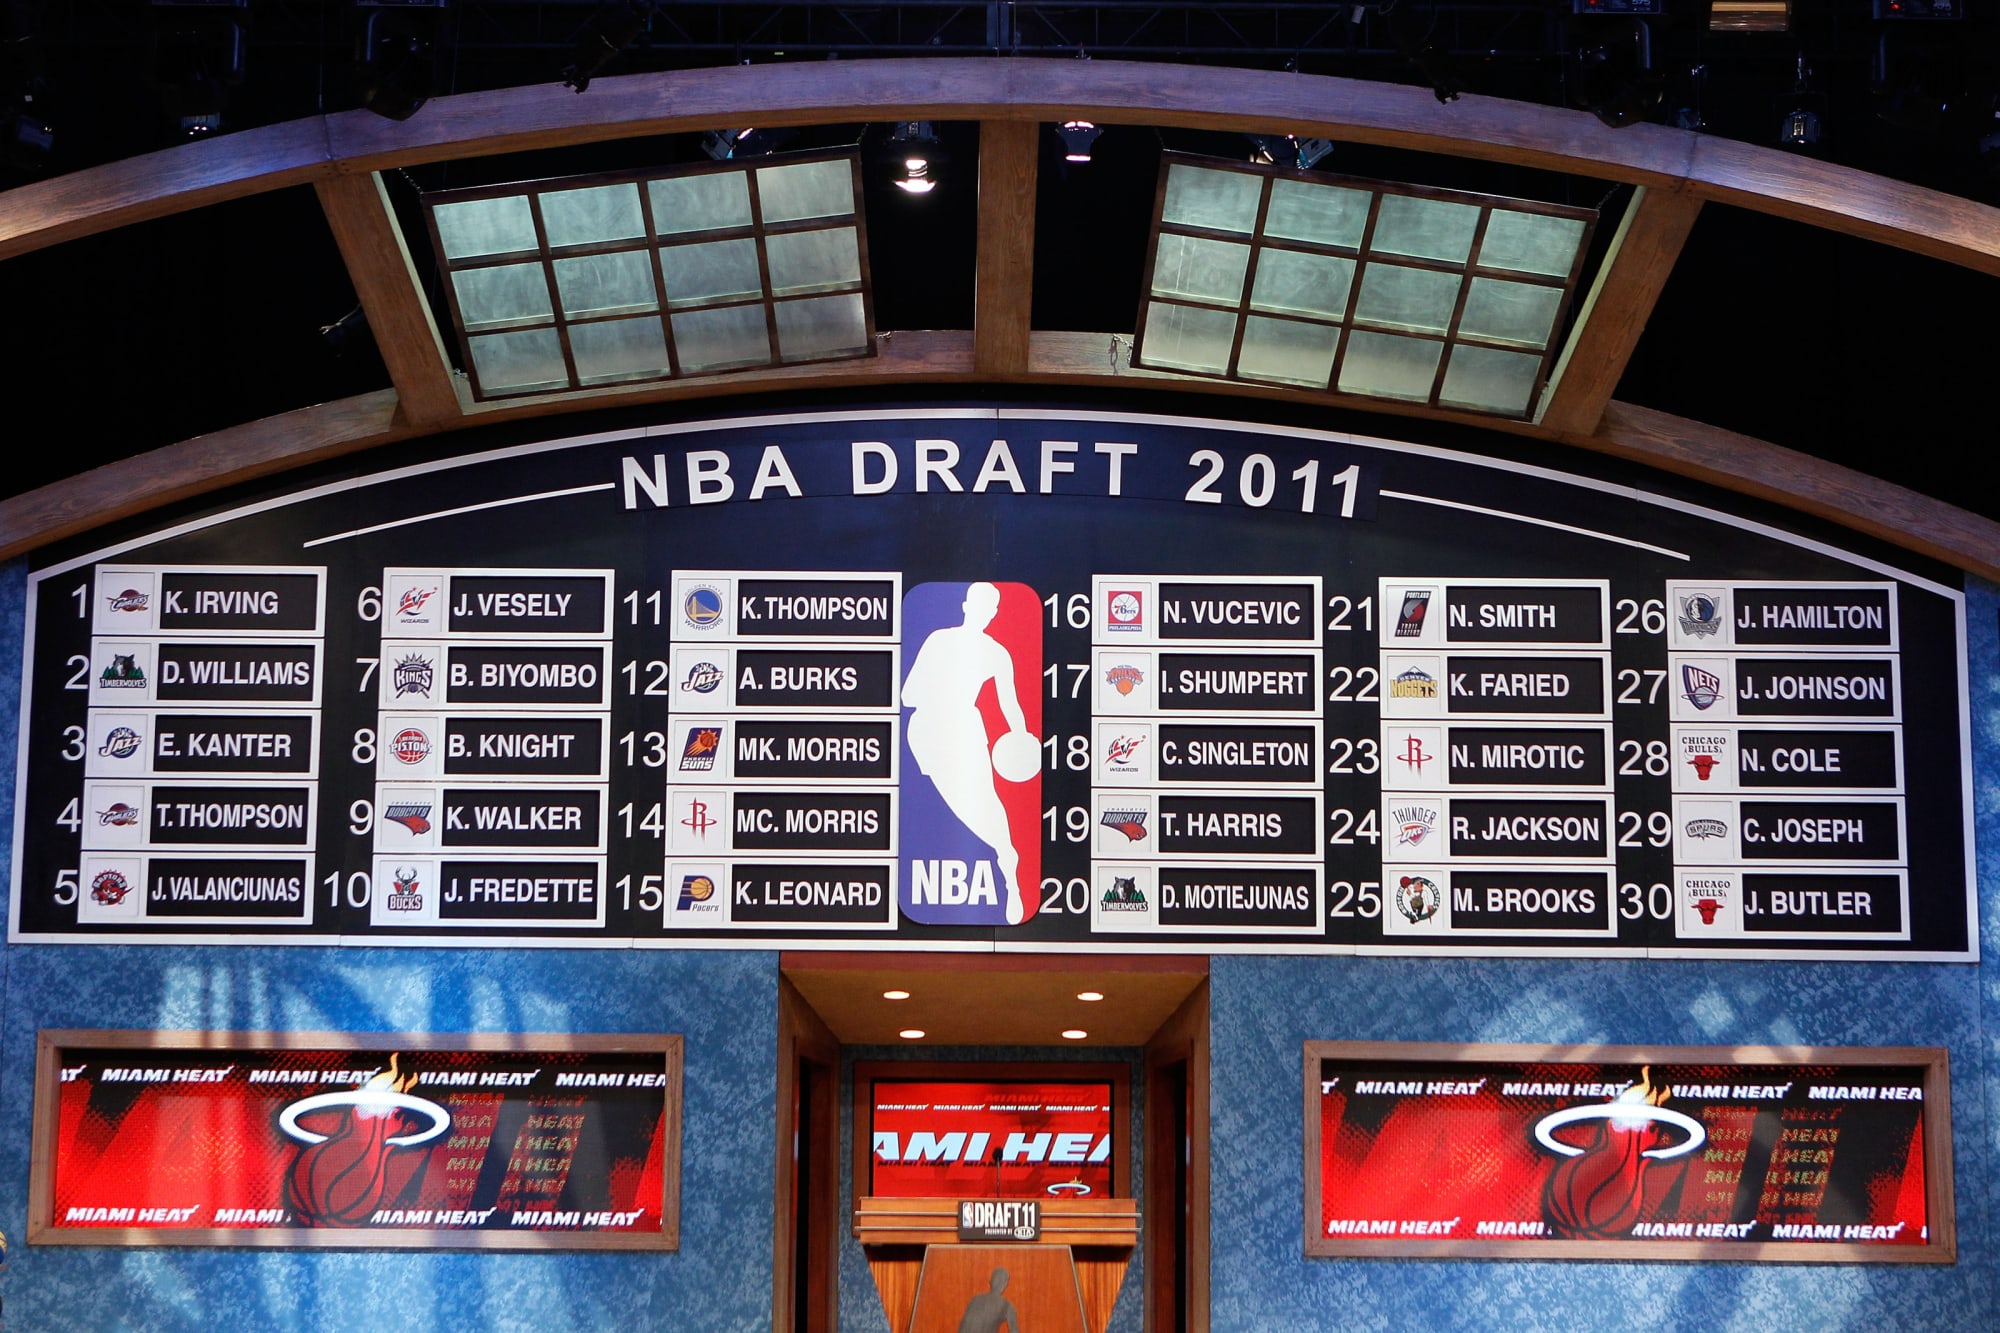 Detroit Pistons history: Re-drafting the 2011 NBA Draft